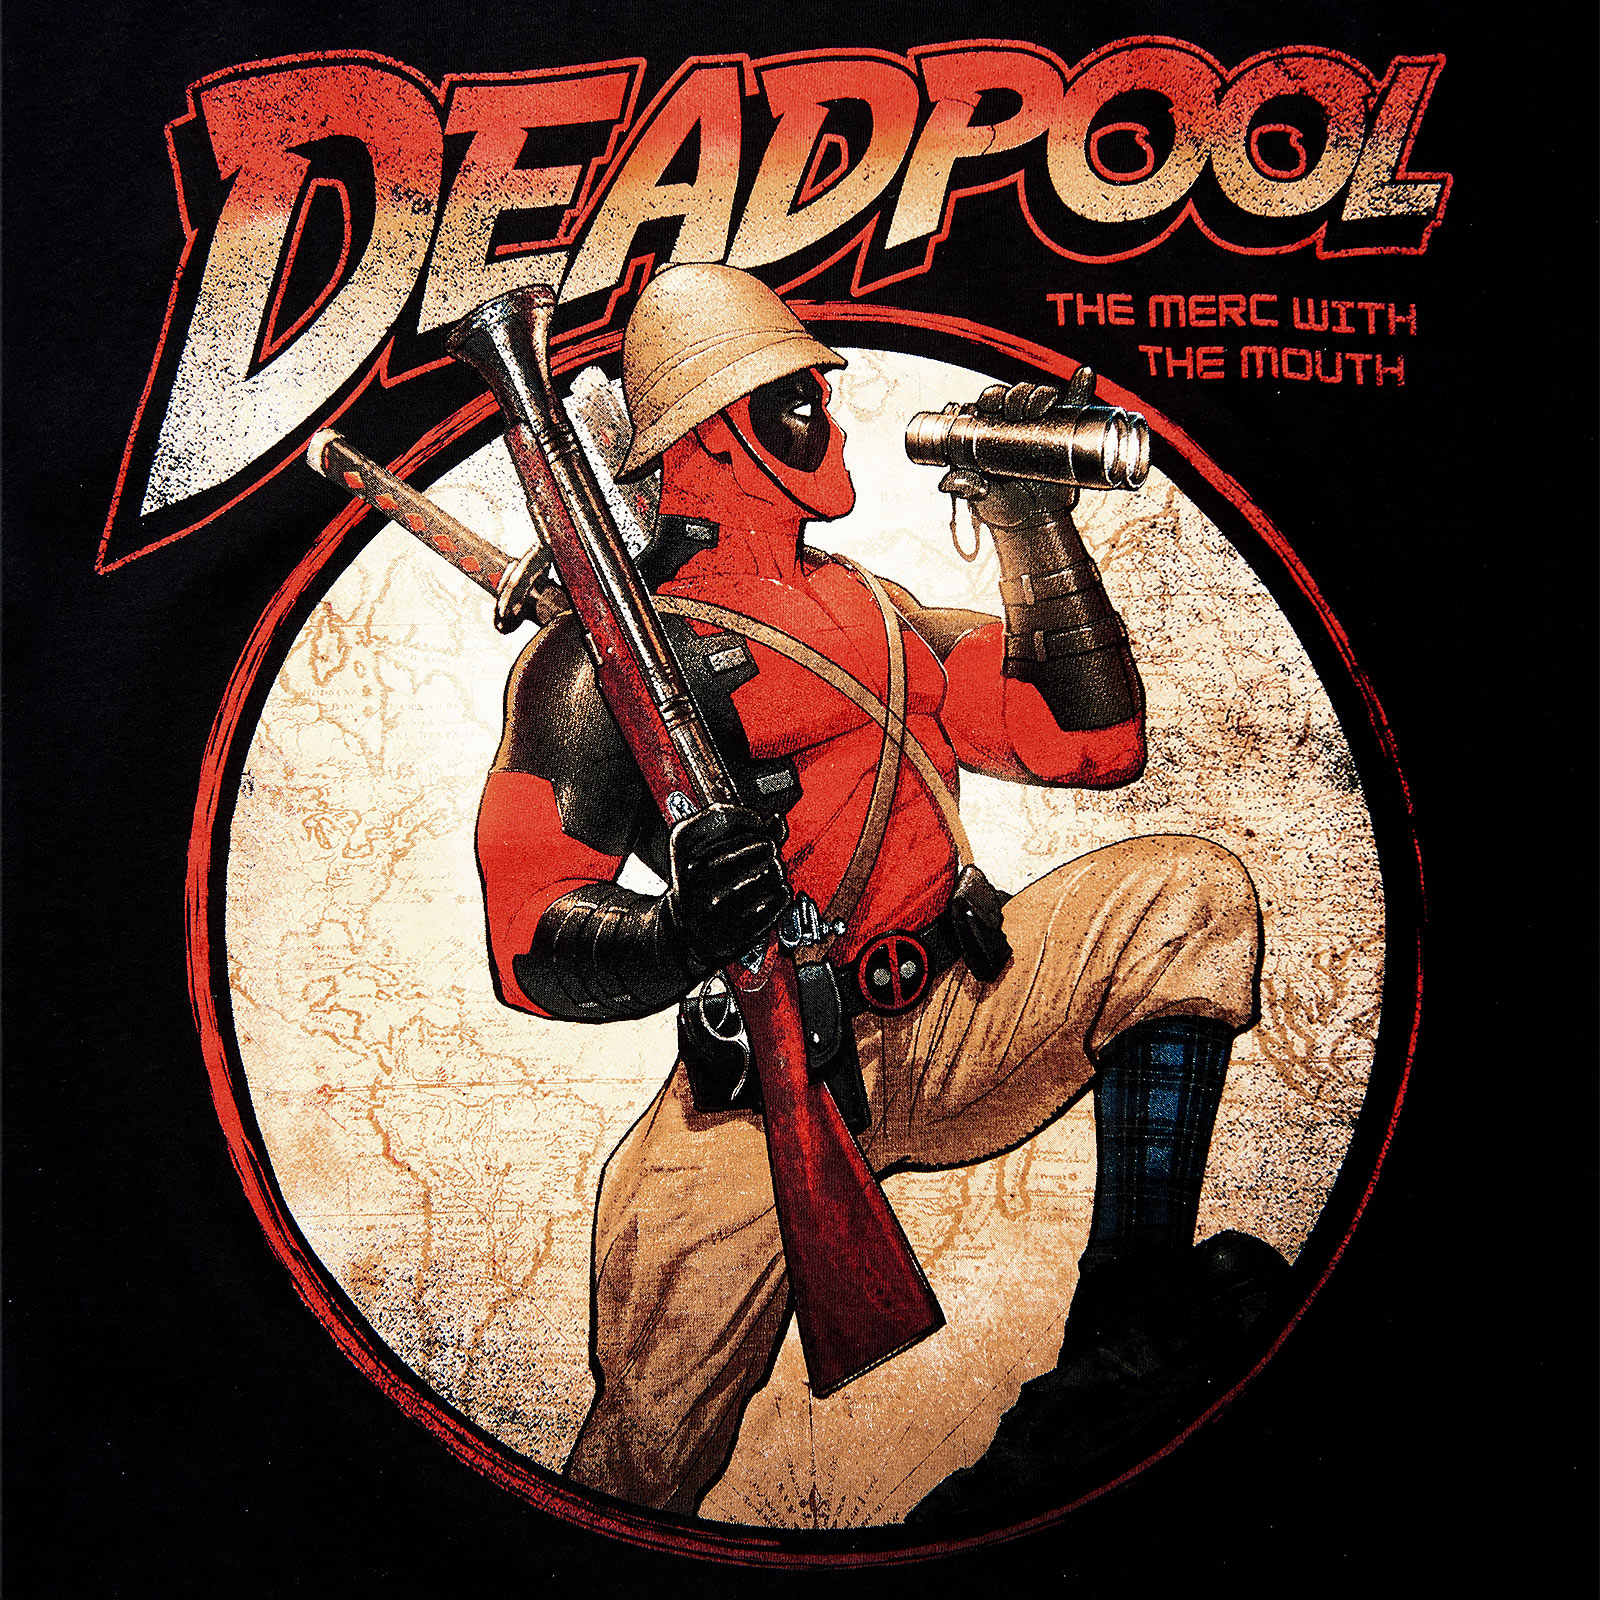 Deadpool - Time for Adventures T-Shirt schwarz